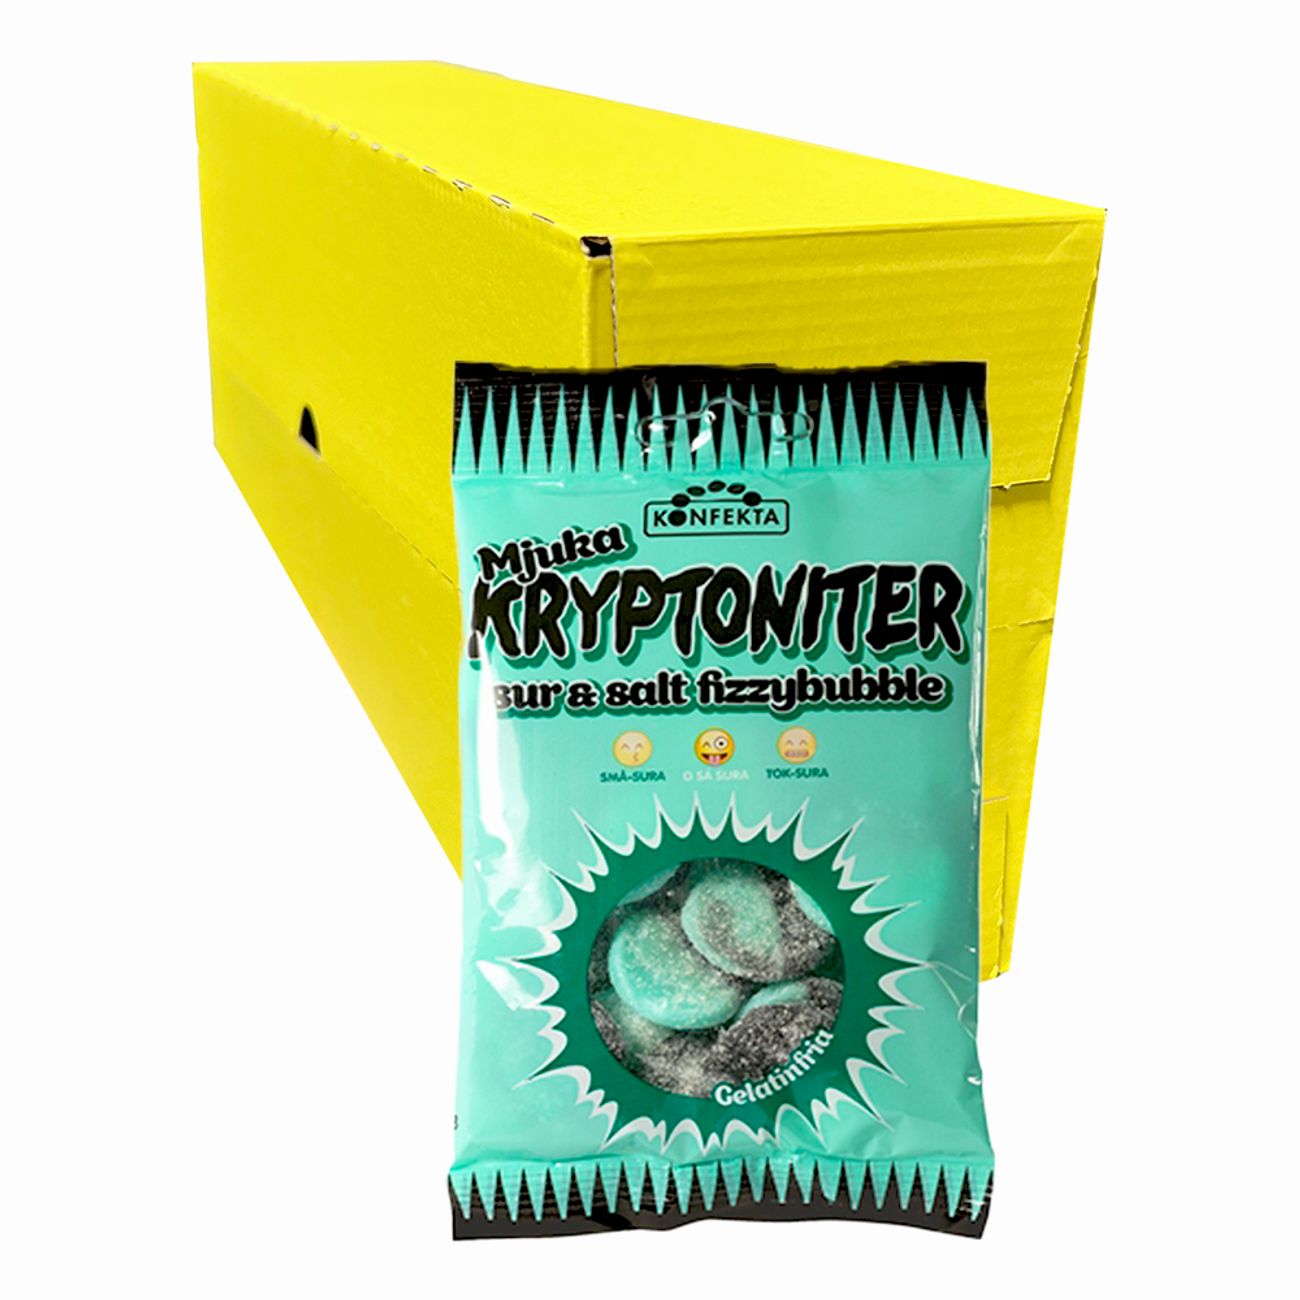 kryptoniter-mjuka-fizzybubble-storpack-42582-2